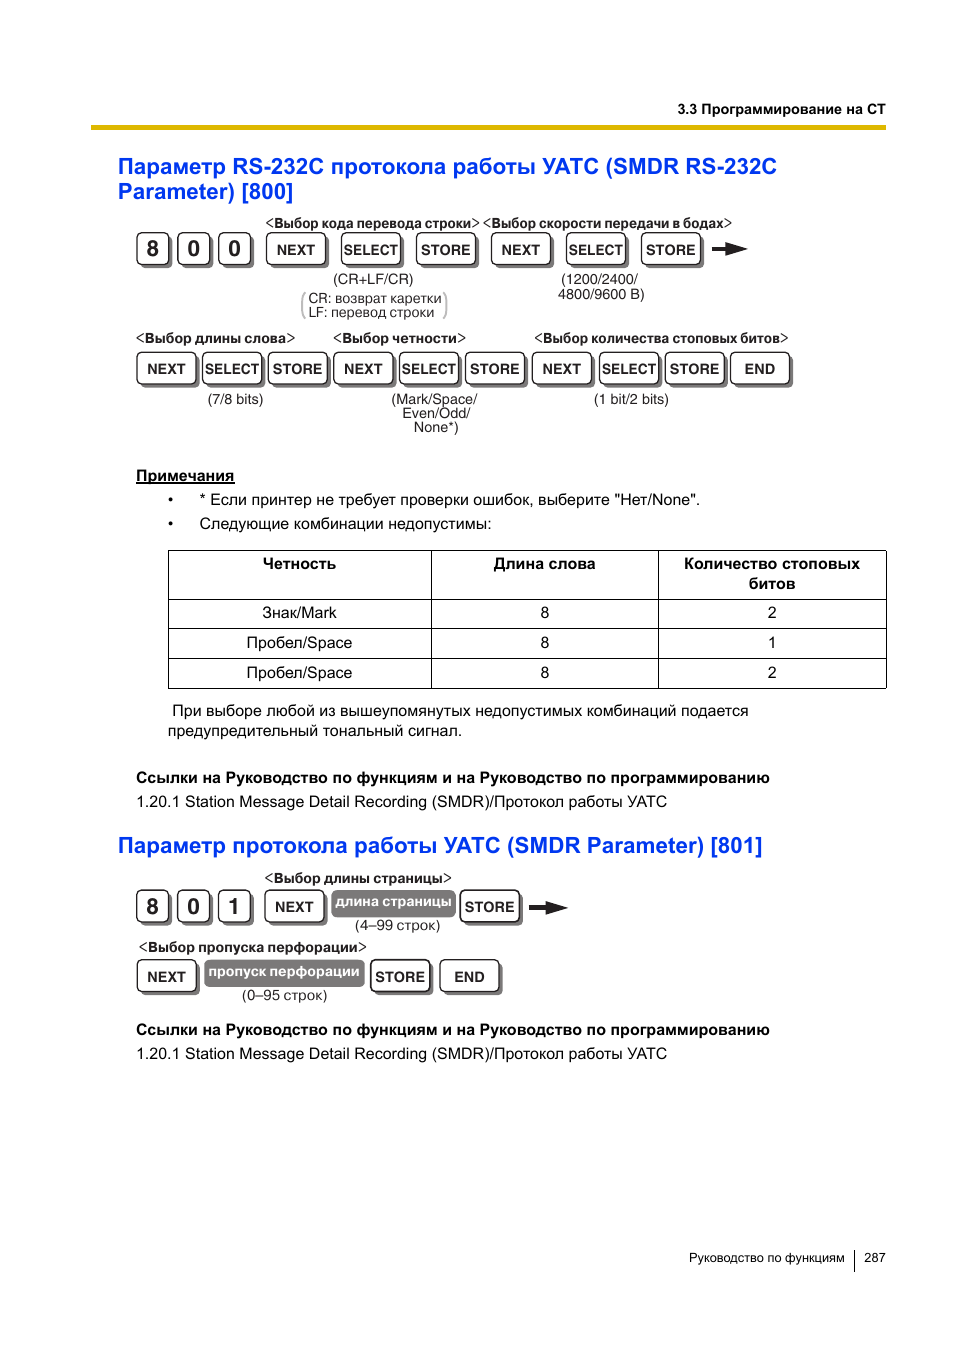 Параметр rs-232c протокола, Работы уатс (smdr rs-232c parameter) [800]) | Инструкция по эксплуатации Panasonic KX-TEA308RU | Страница 287 / 318